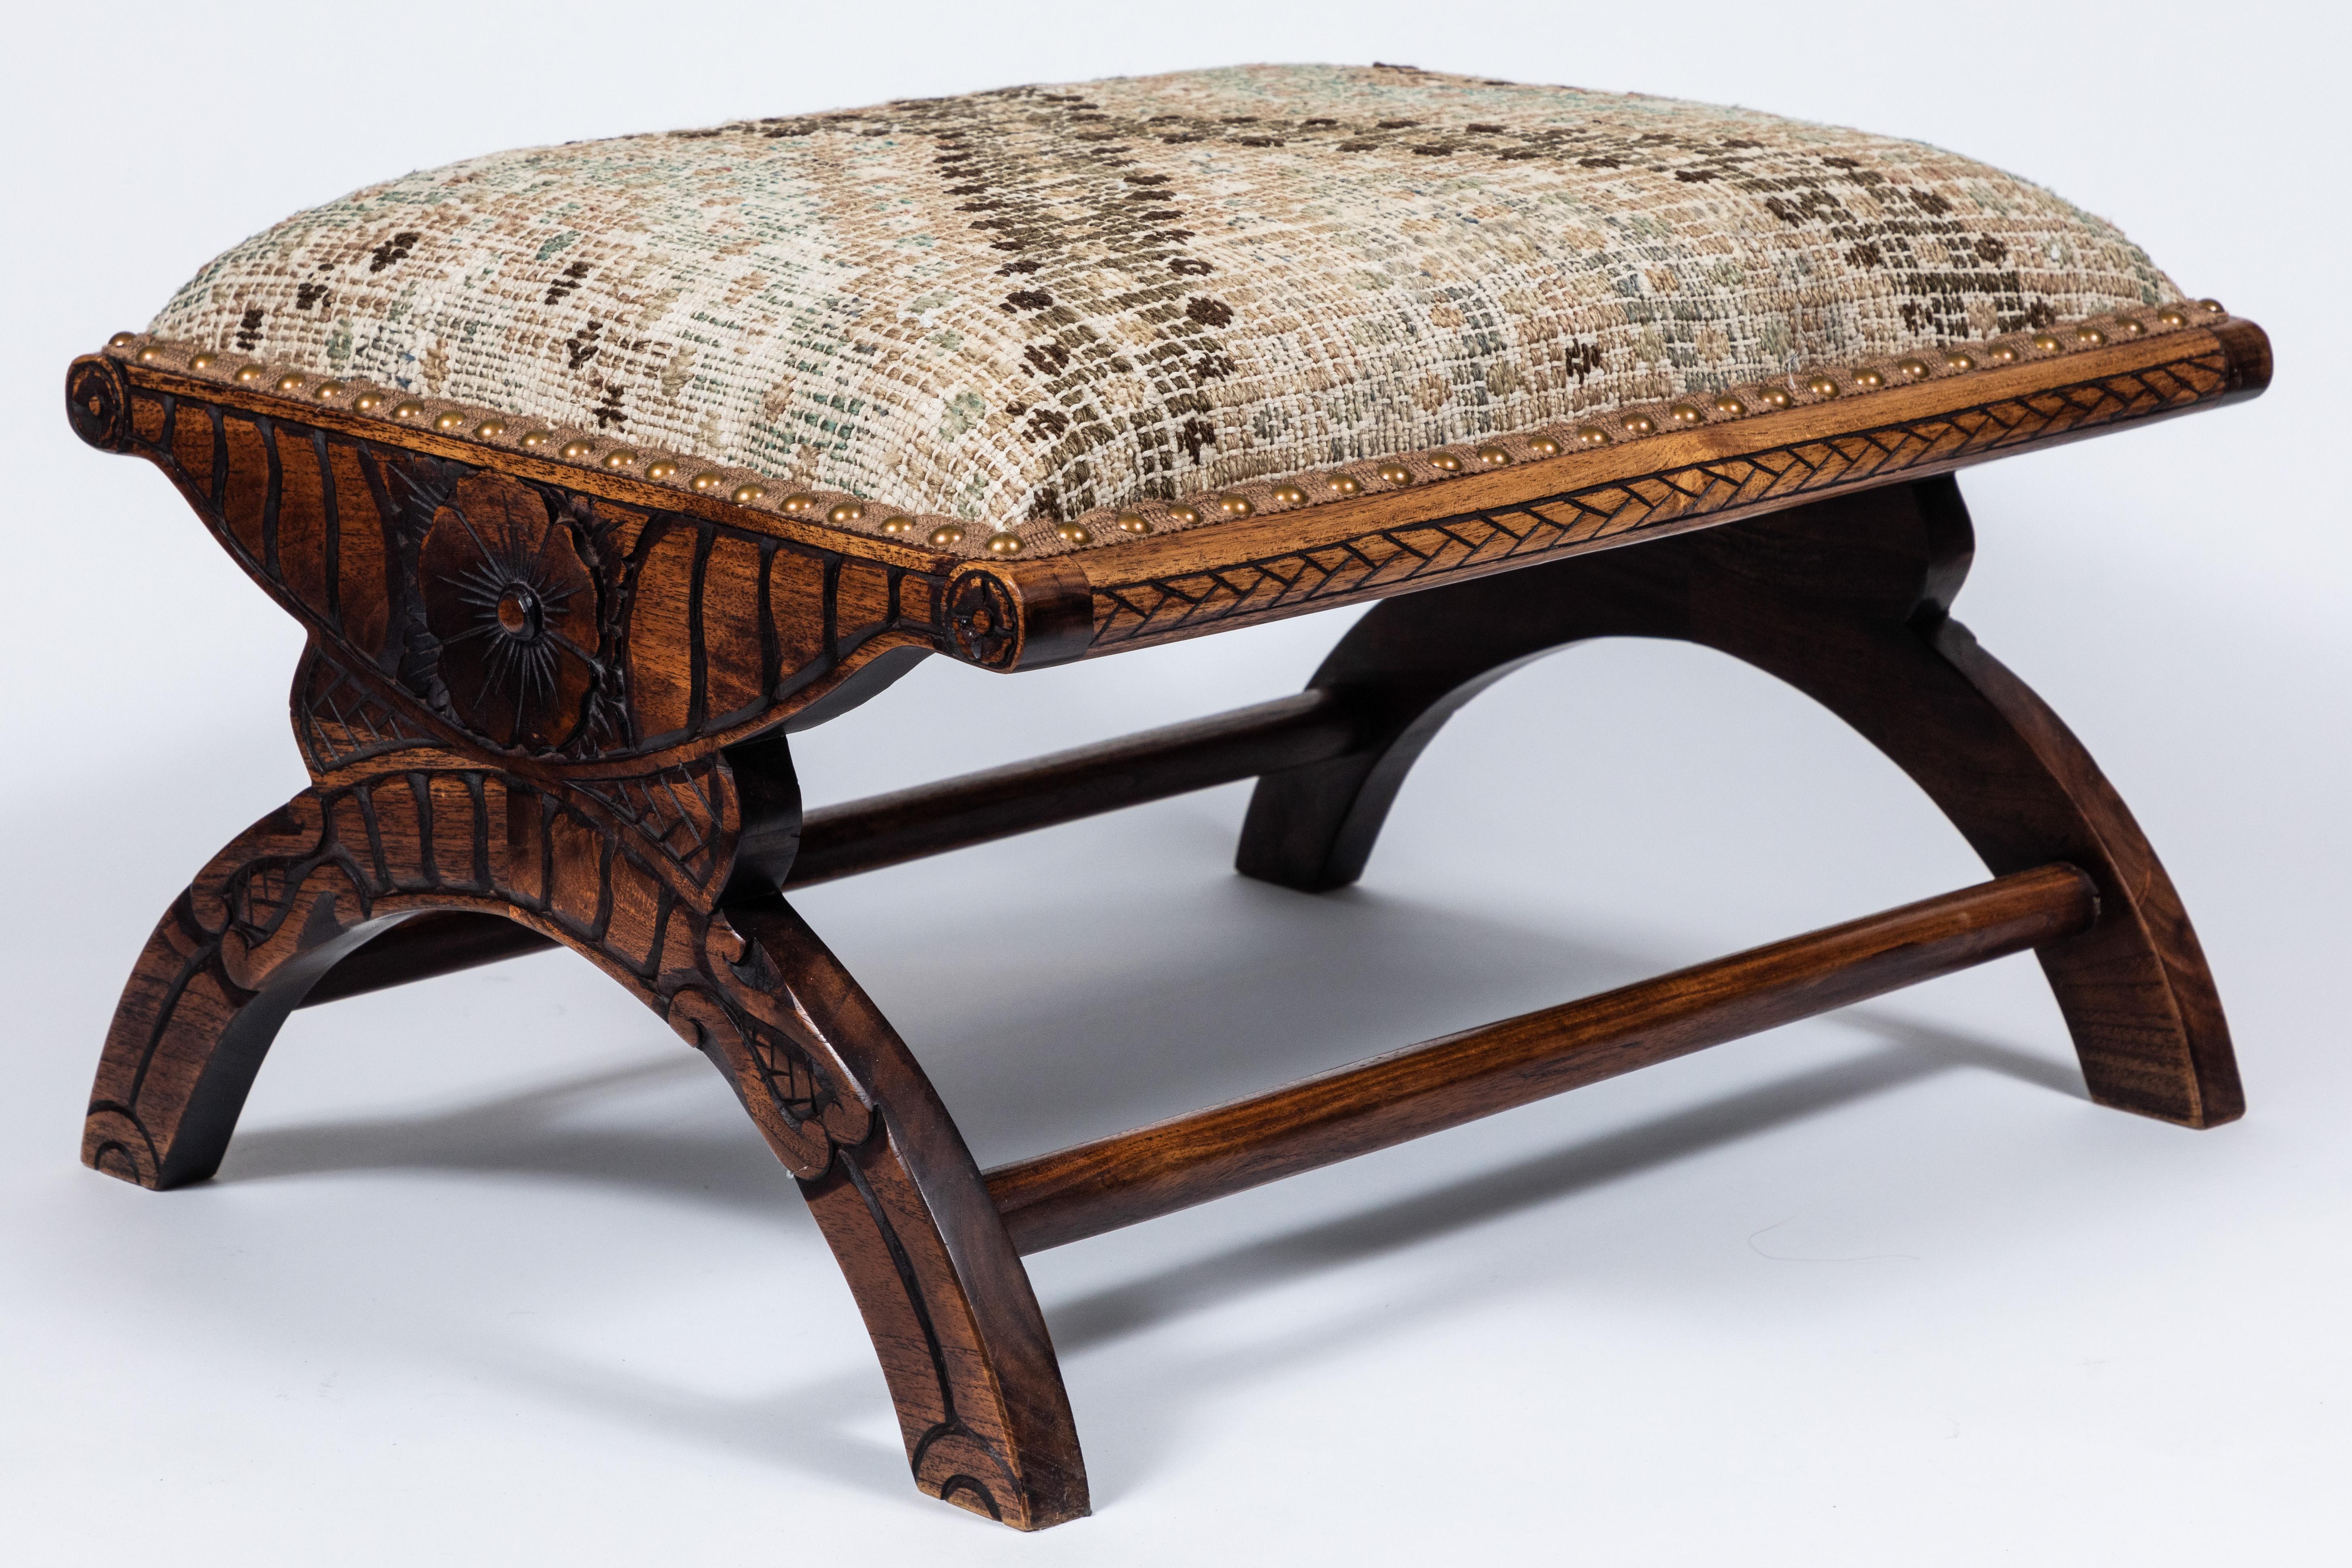 Antique Wood Footstool Upholstered in a Vintage Turkish Rug (Geschnitzt)